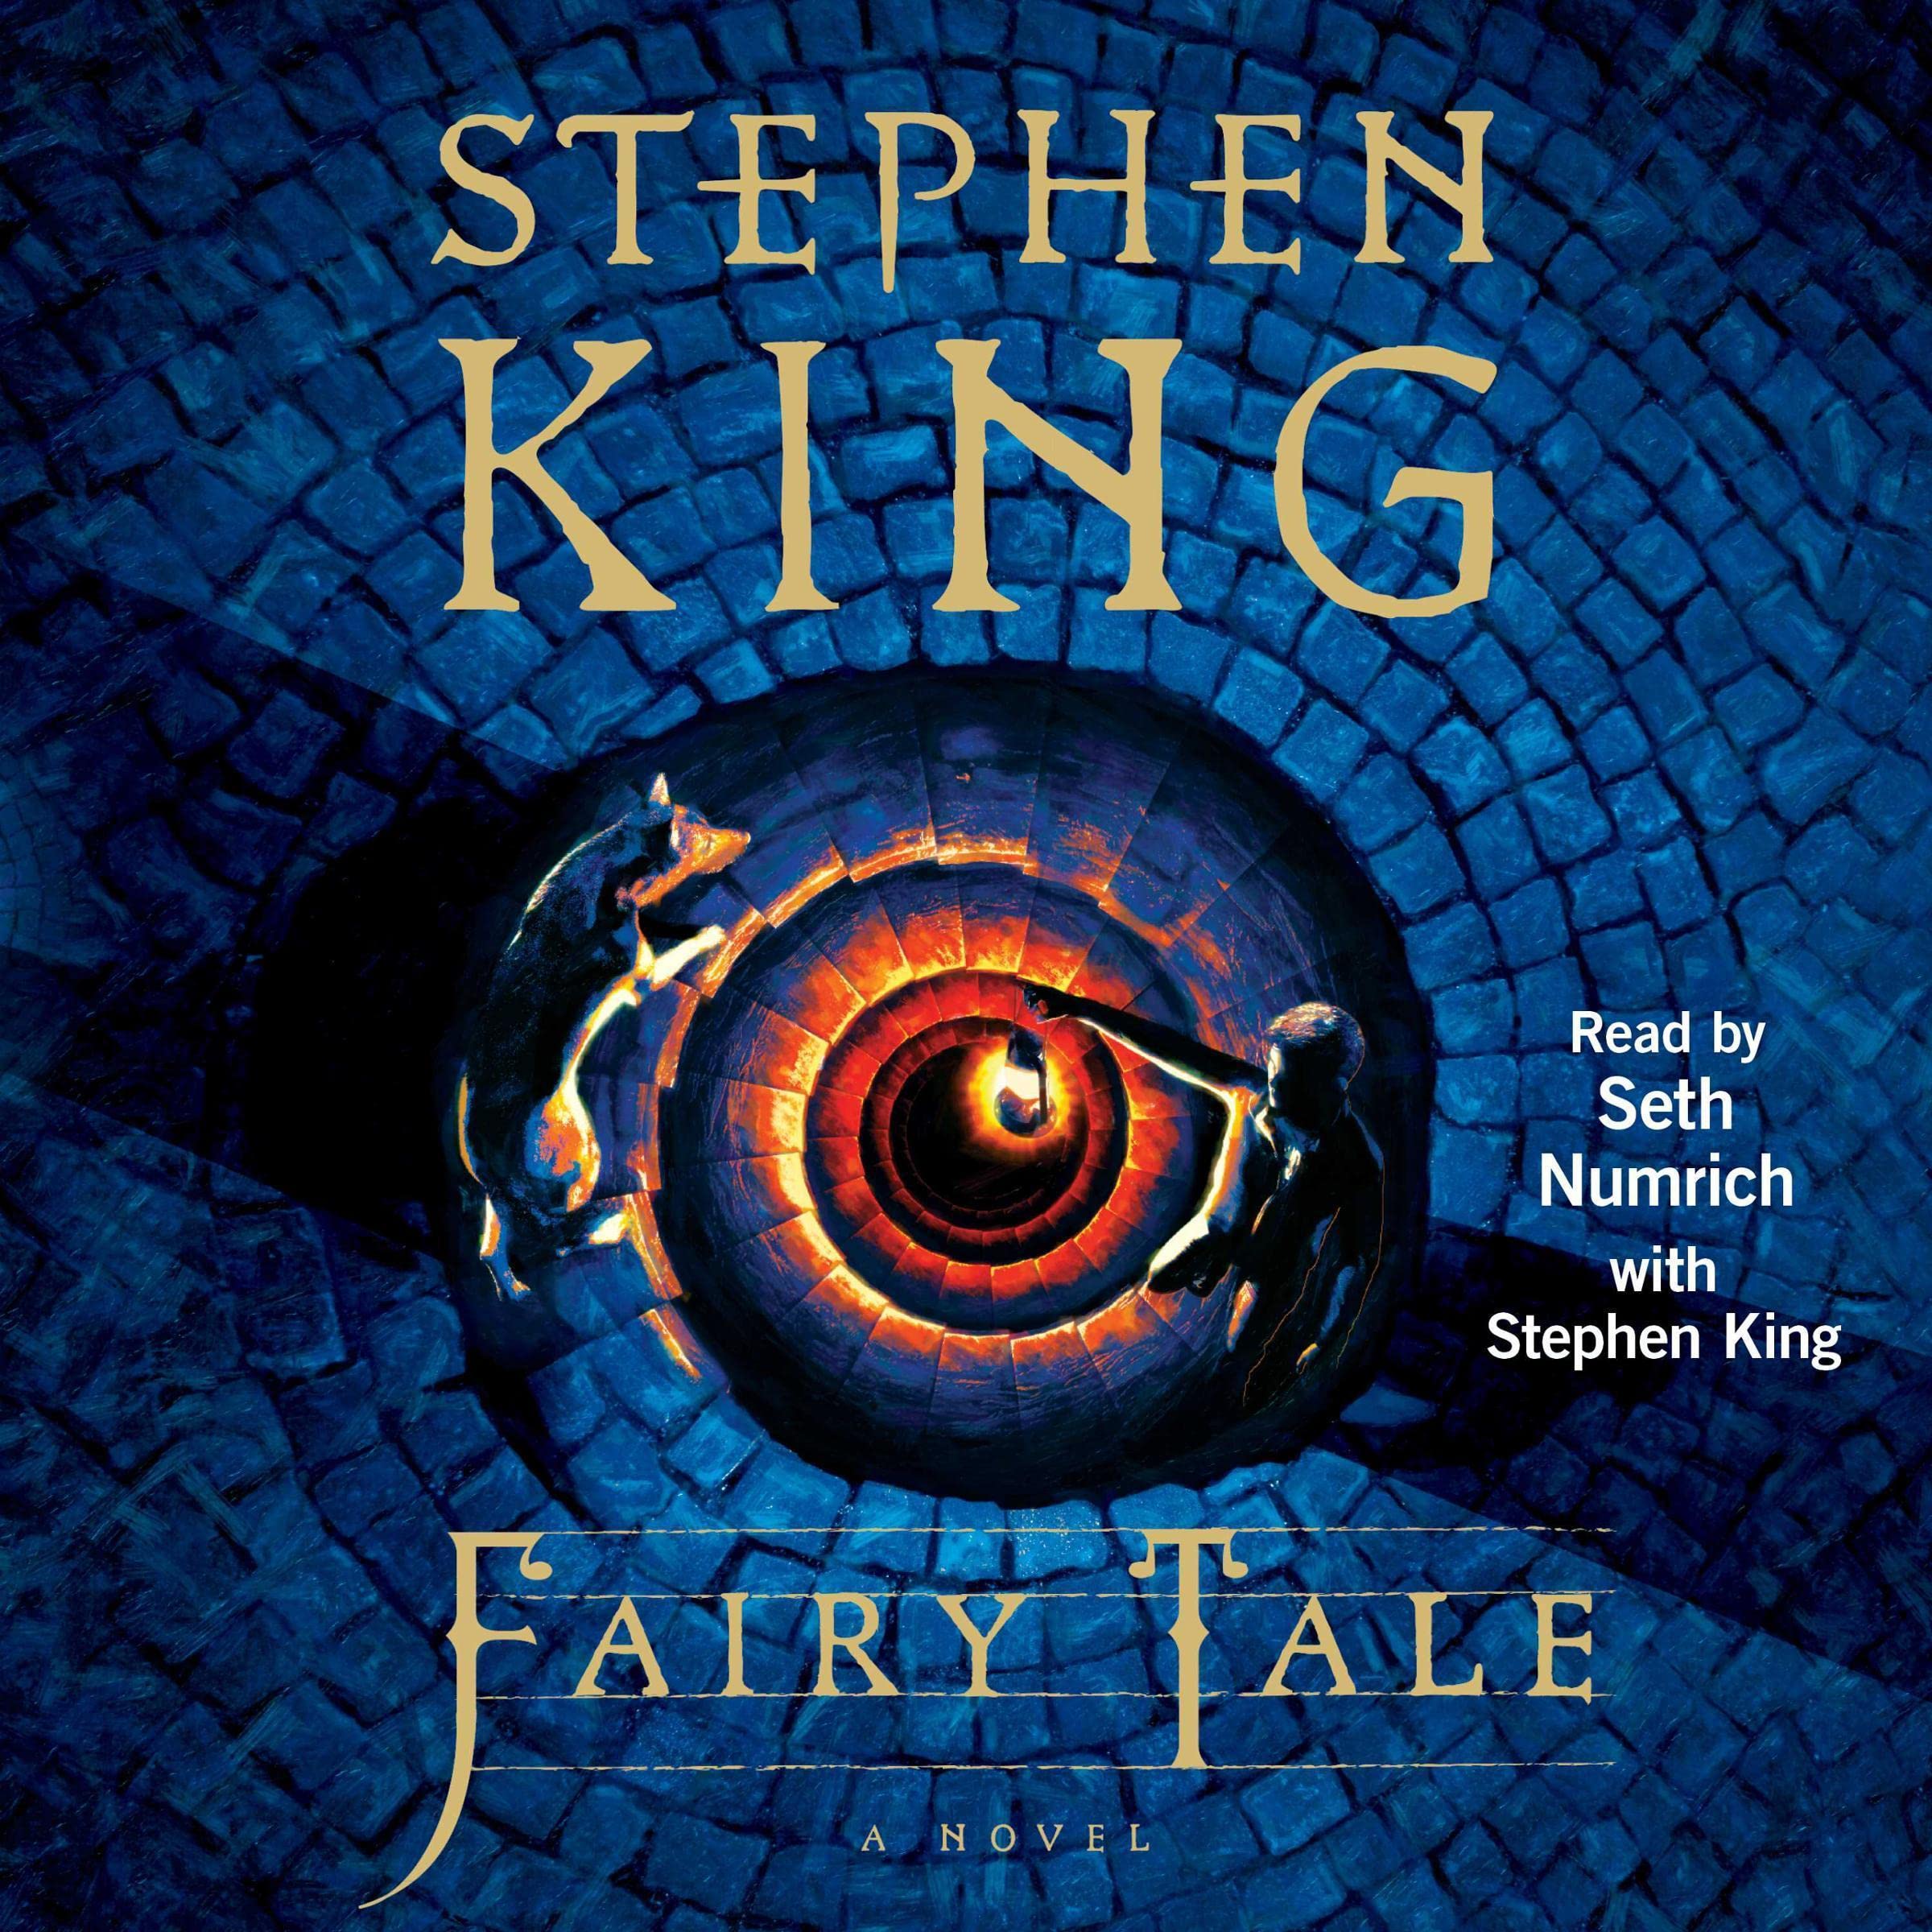 Stephen King Audiobooks: An Adventure for the Ears